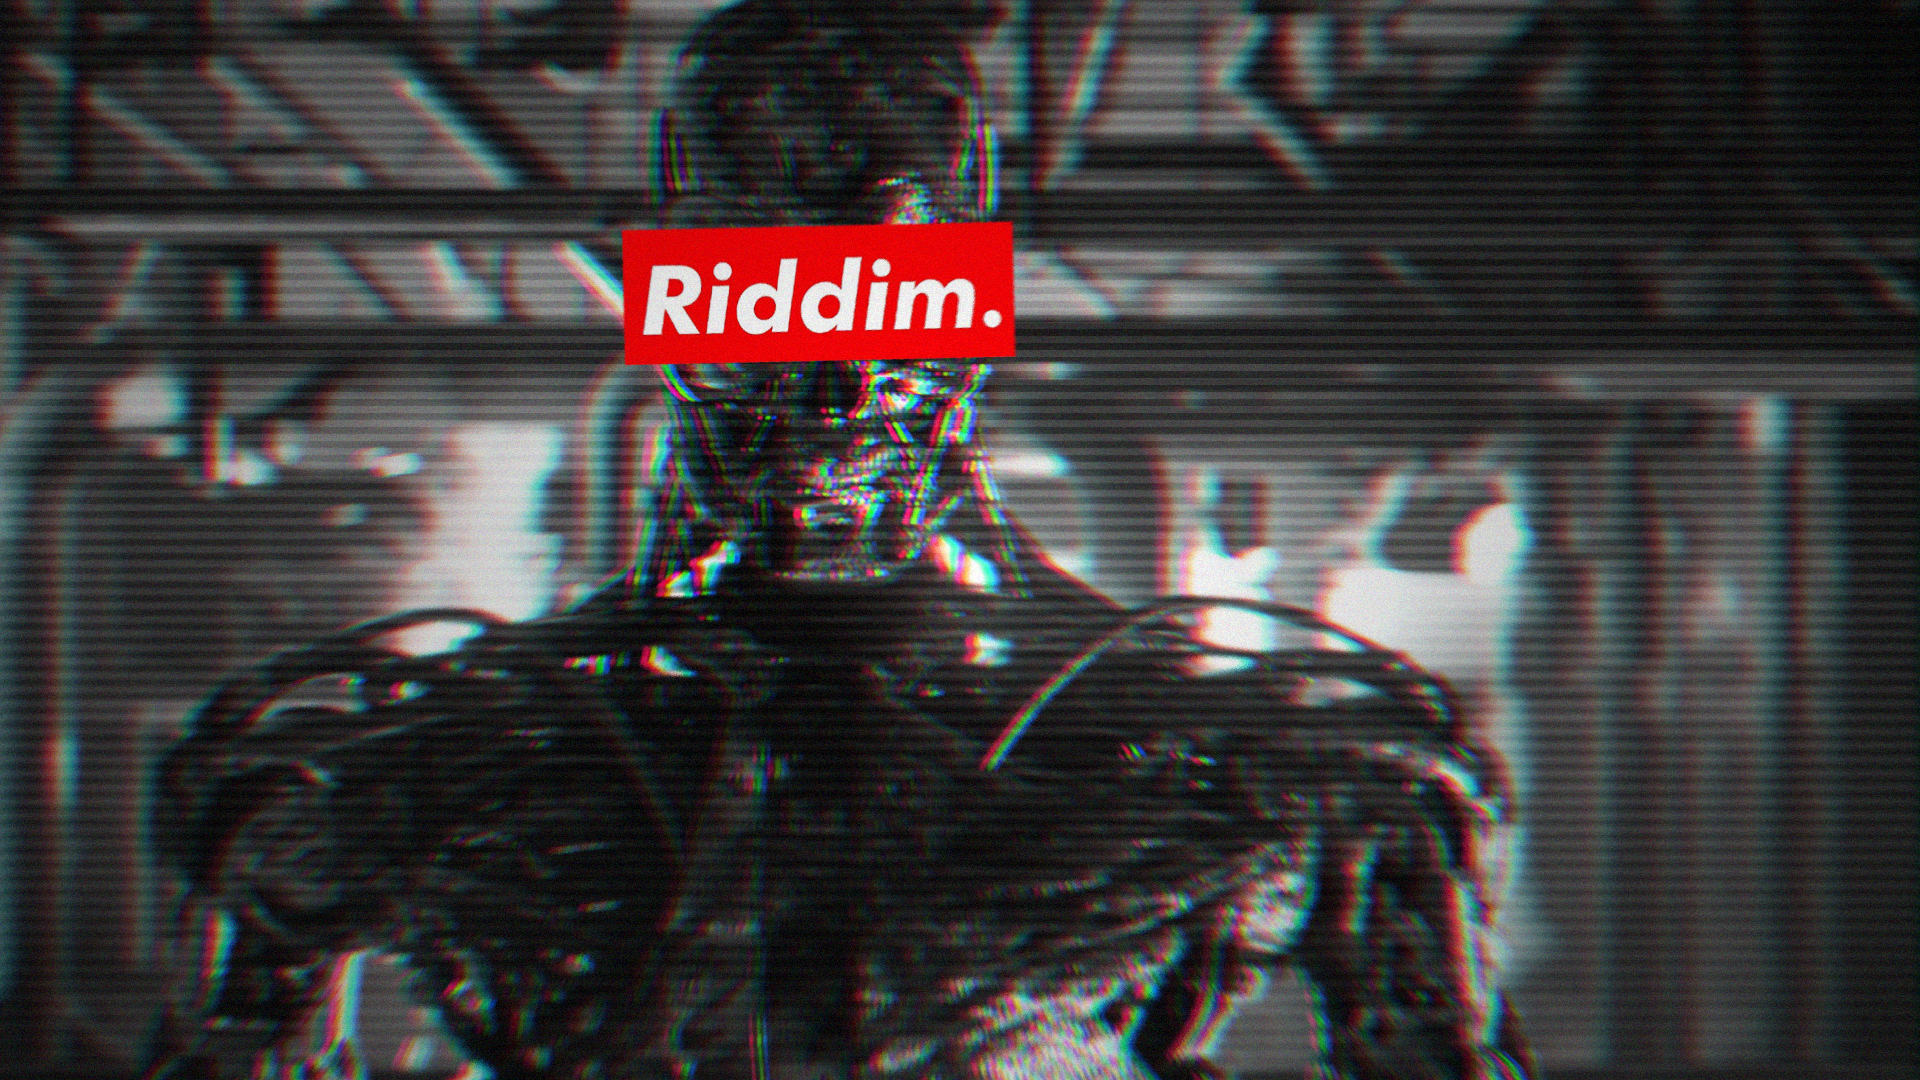 General 1920x1080 Riddim Dubstep dubstep glitch art VHS artwork minimalism cyborg machine movie characters Terminator